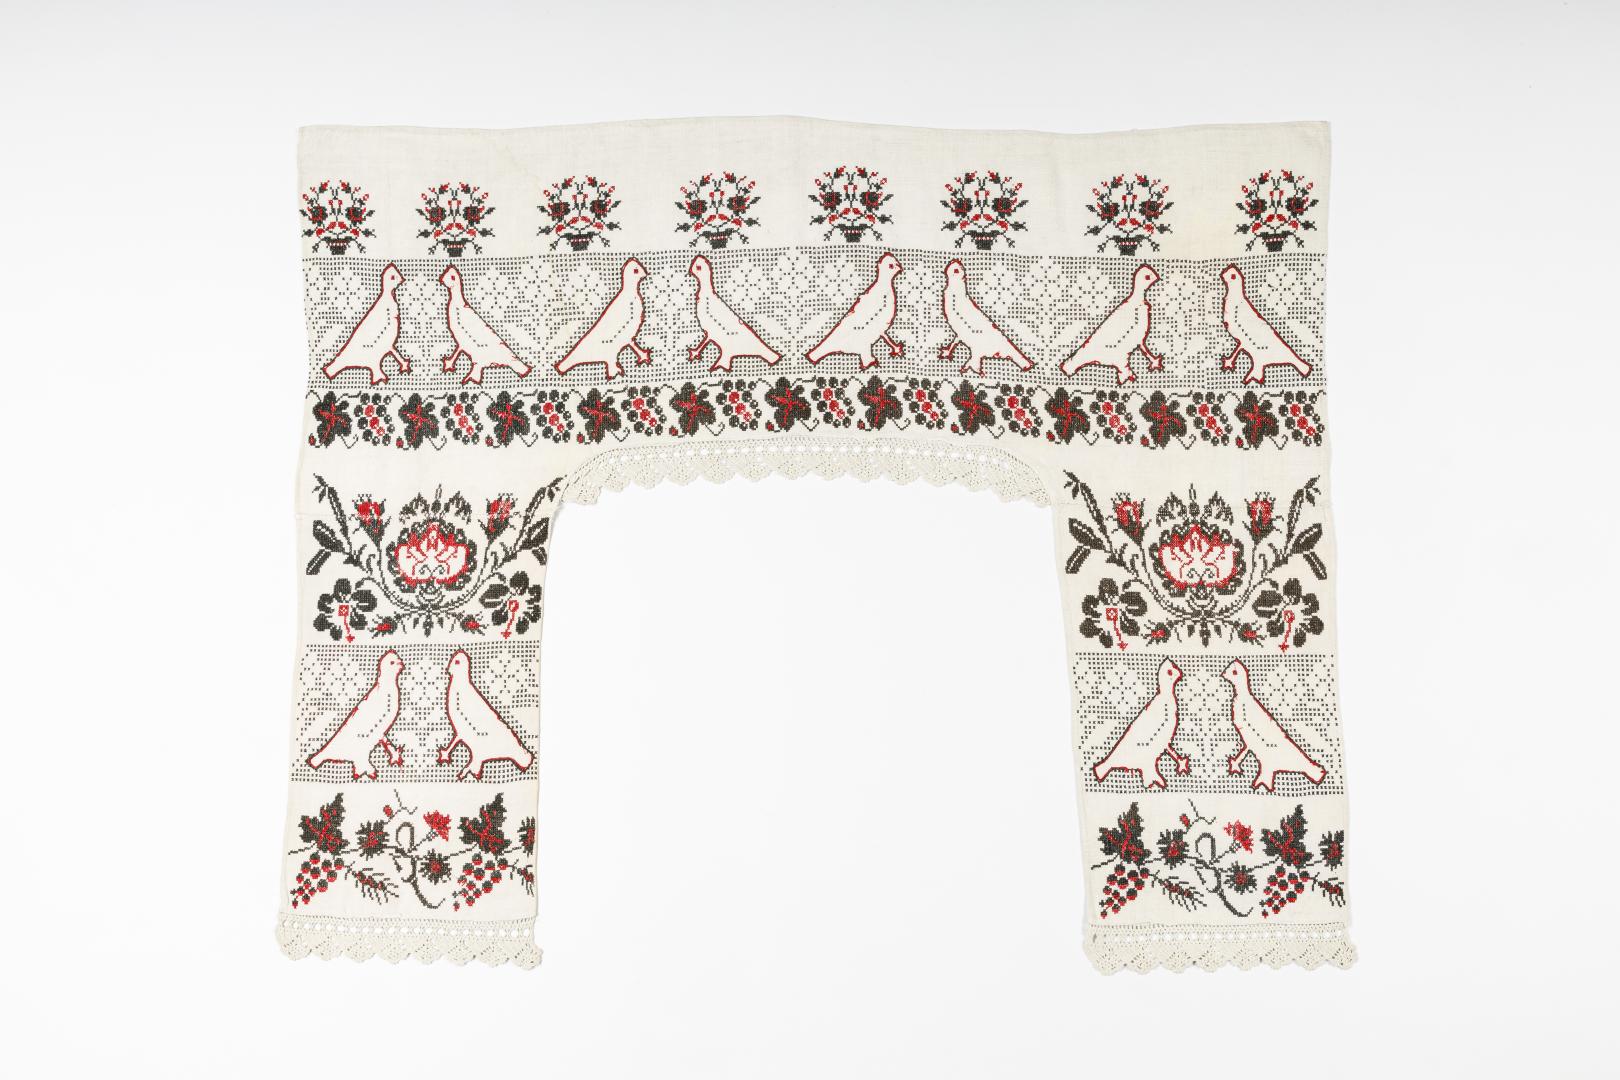 Firanka (embroidered curtain)